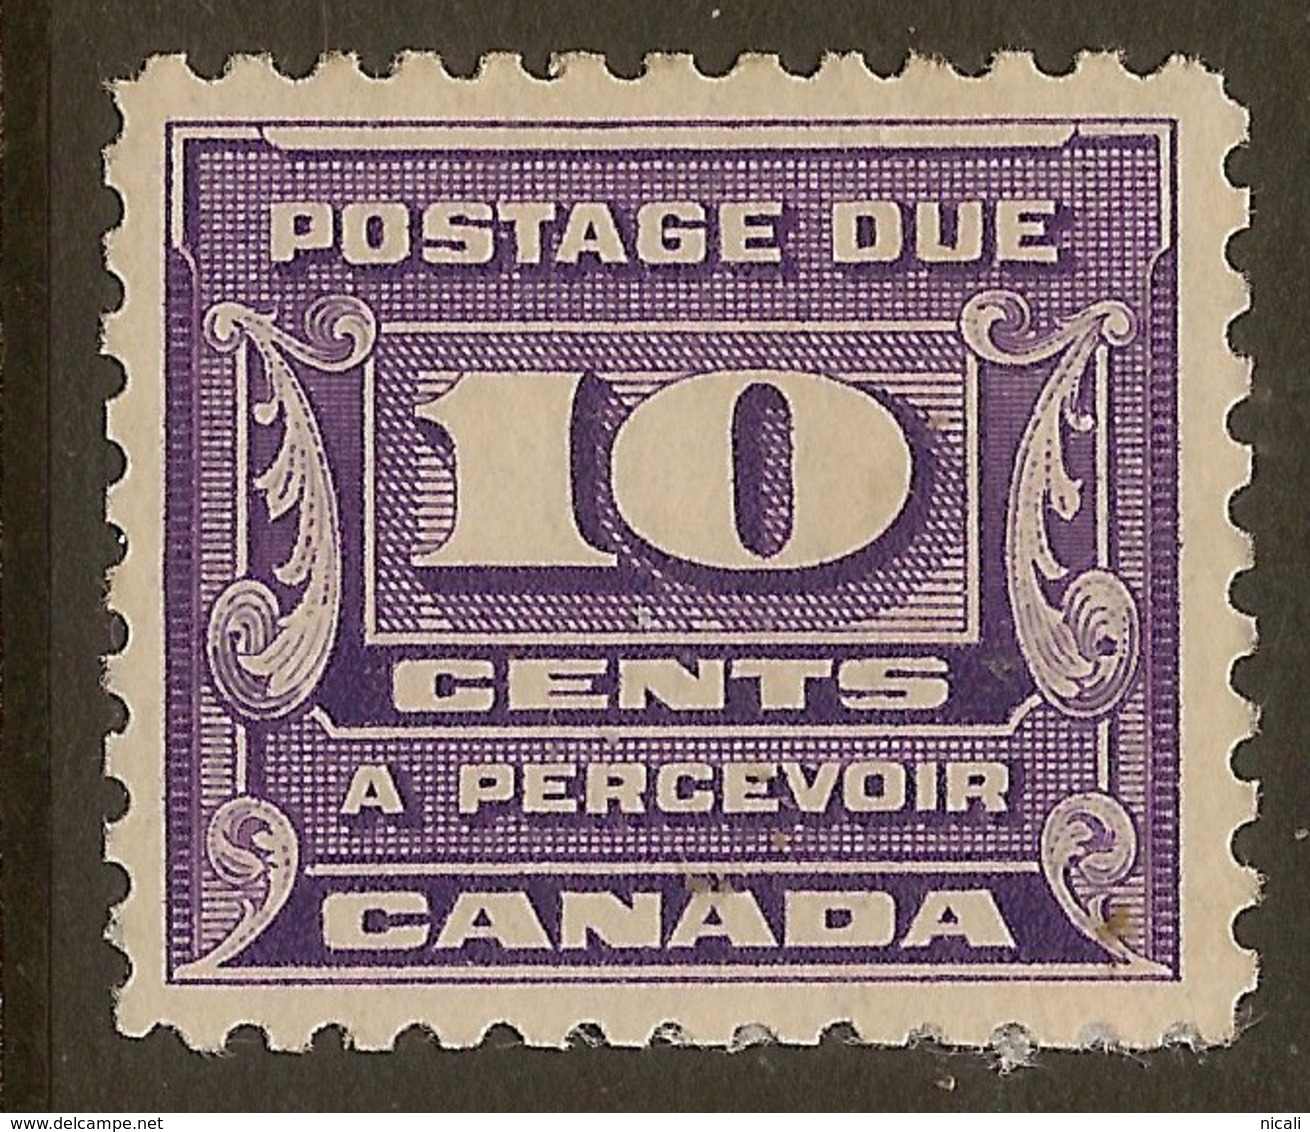 CANADA 1933 10c Postage Due SG D17 HM #IM157 - Portomarken